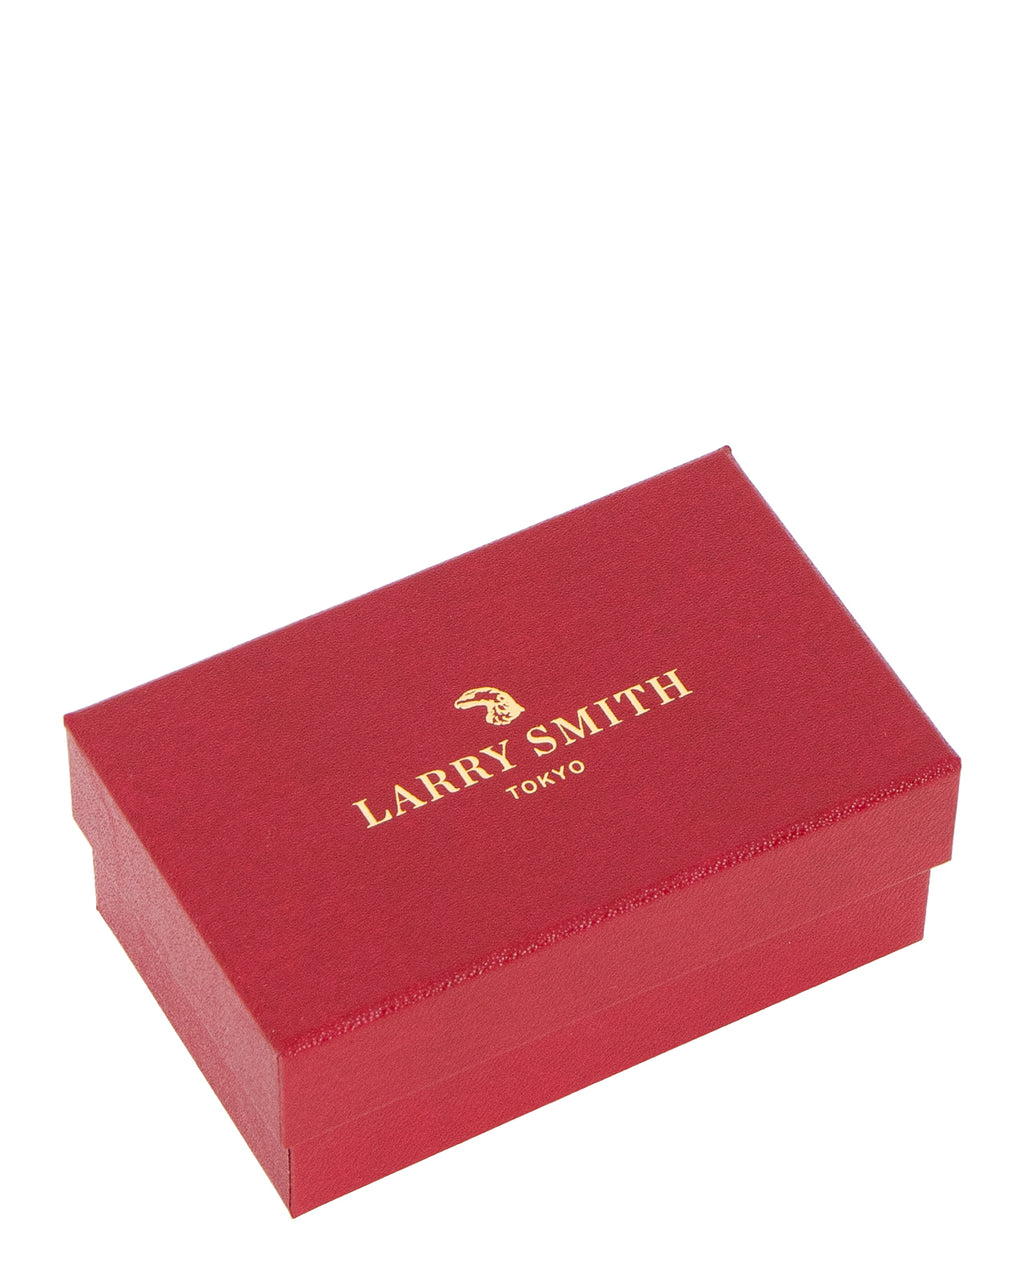 Larry Smith Karakusa Rose Chain Bracelet